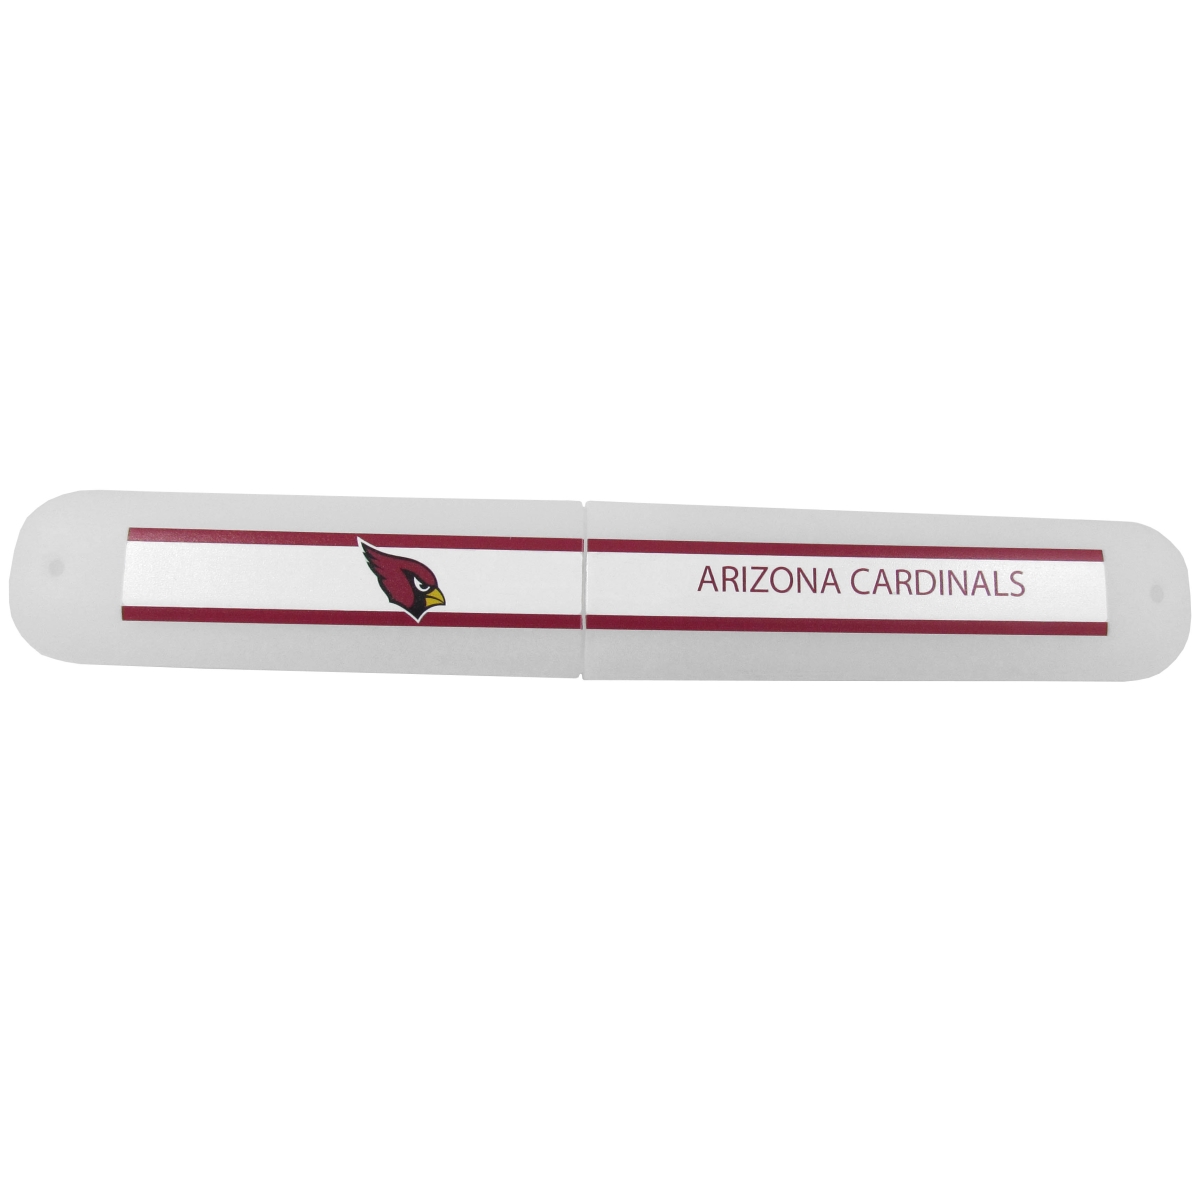 Picture of Siskiyou FTBC035 Unisex NFL Arizona Cardinals Travel Toothbrush Case - One Size